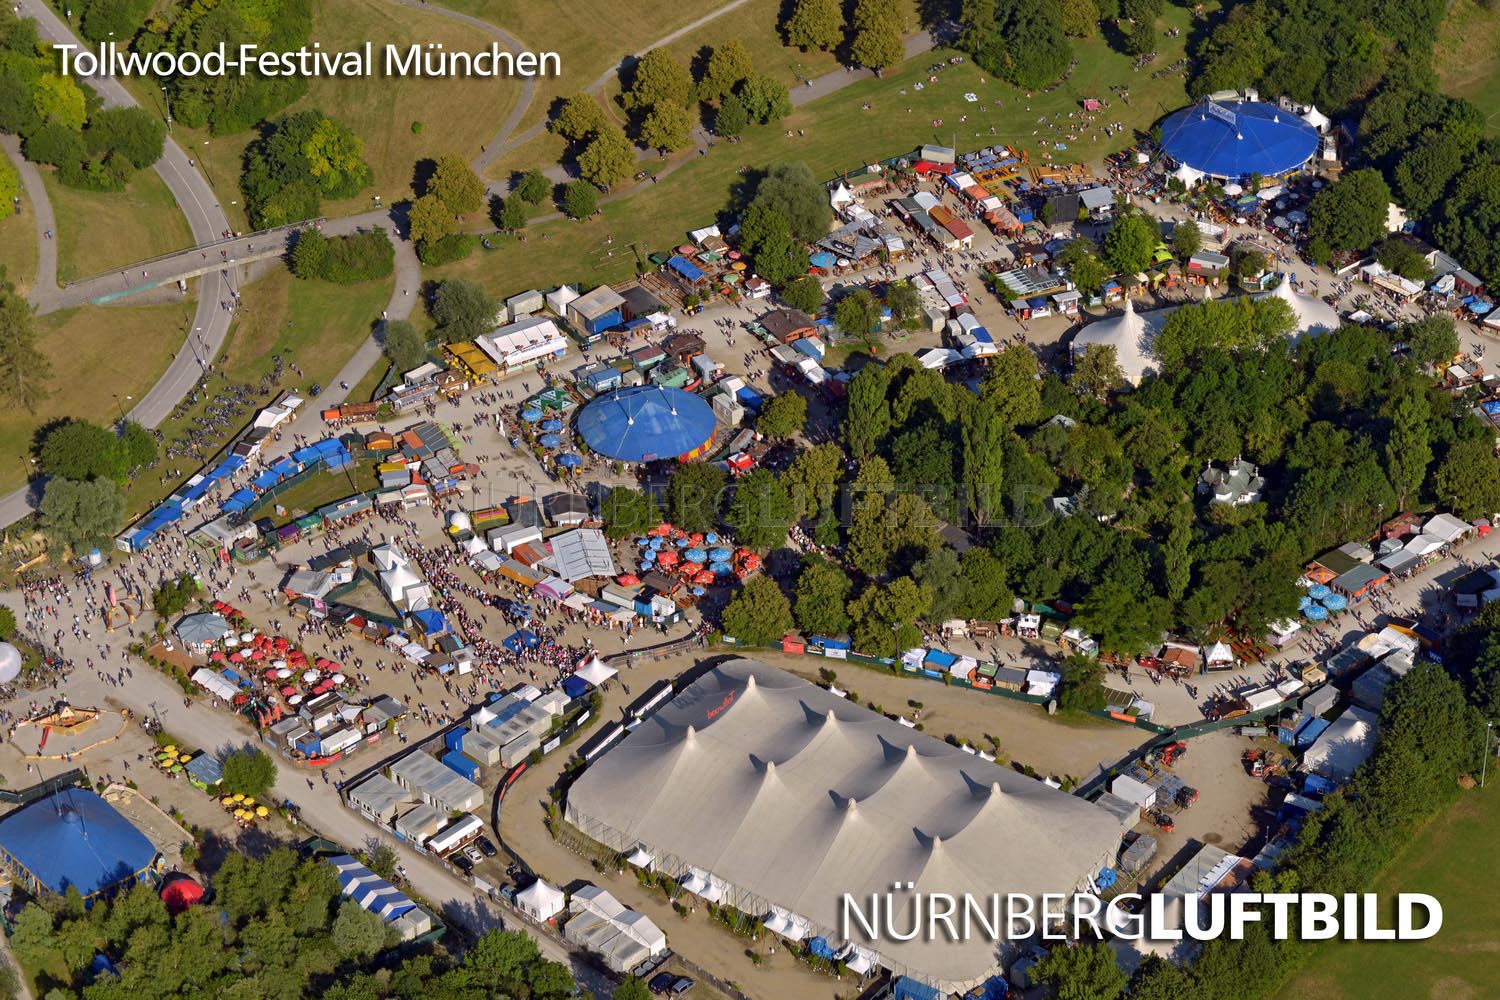 Tollwood-Festival München